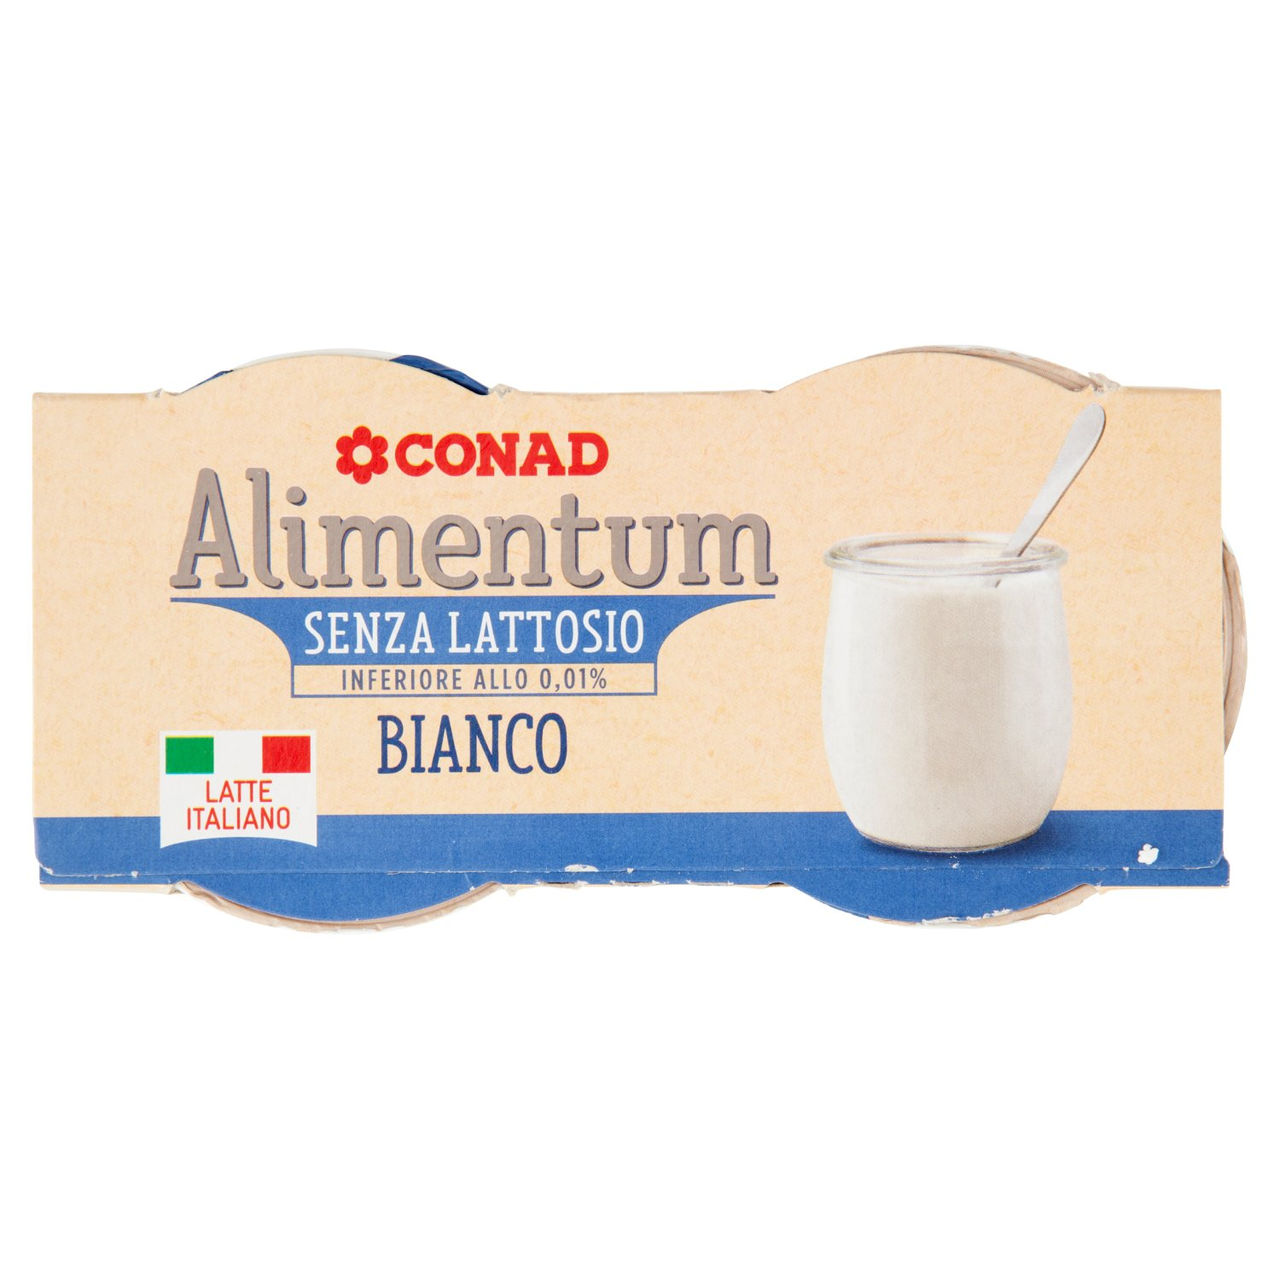 Alimentum Senza Lattosio Bianco Conad  online